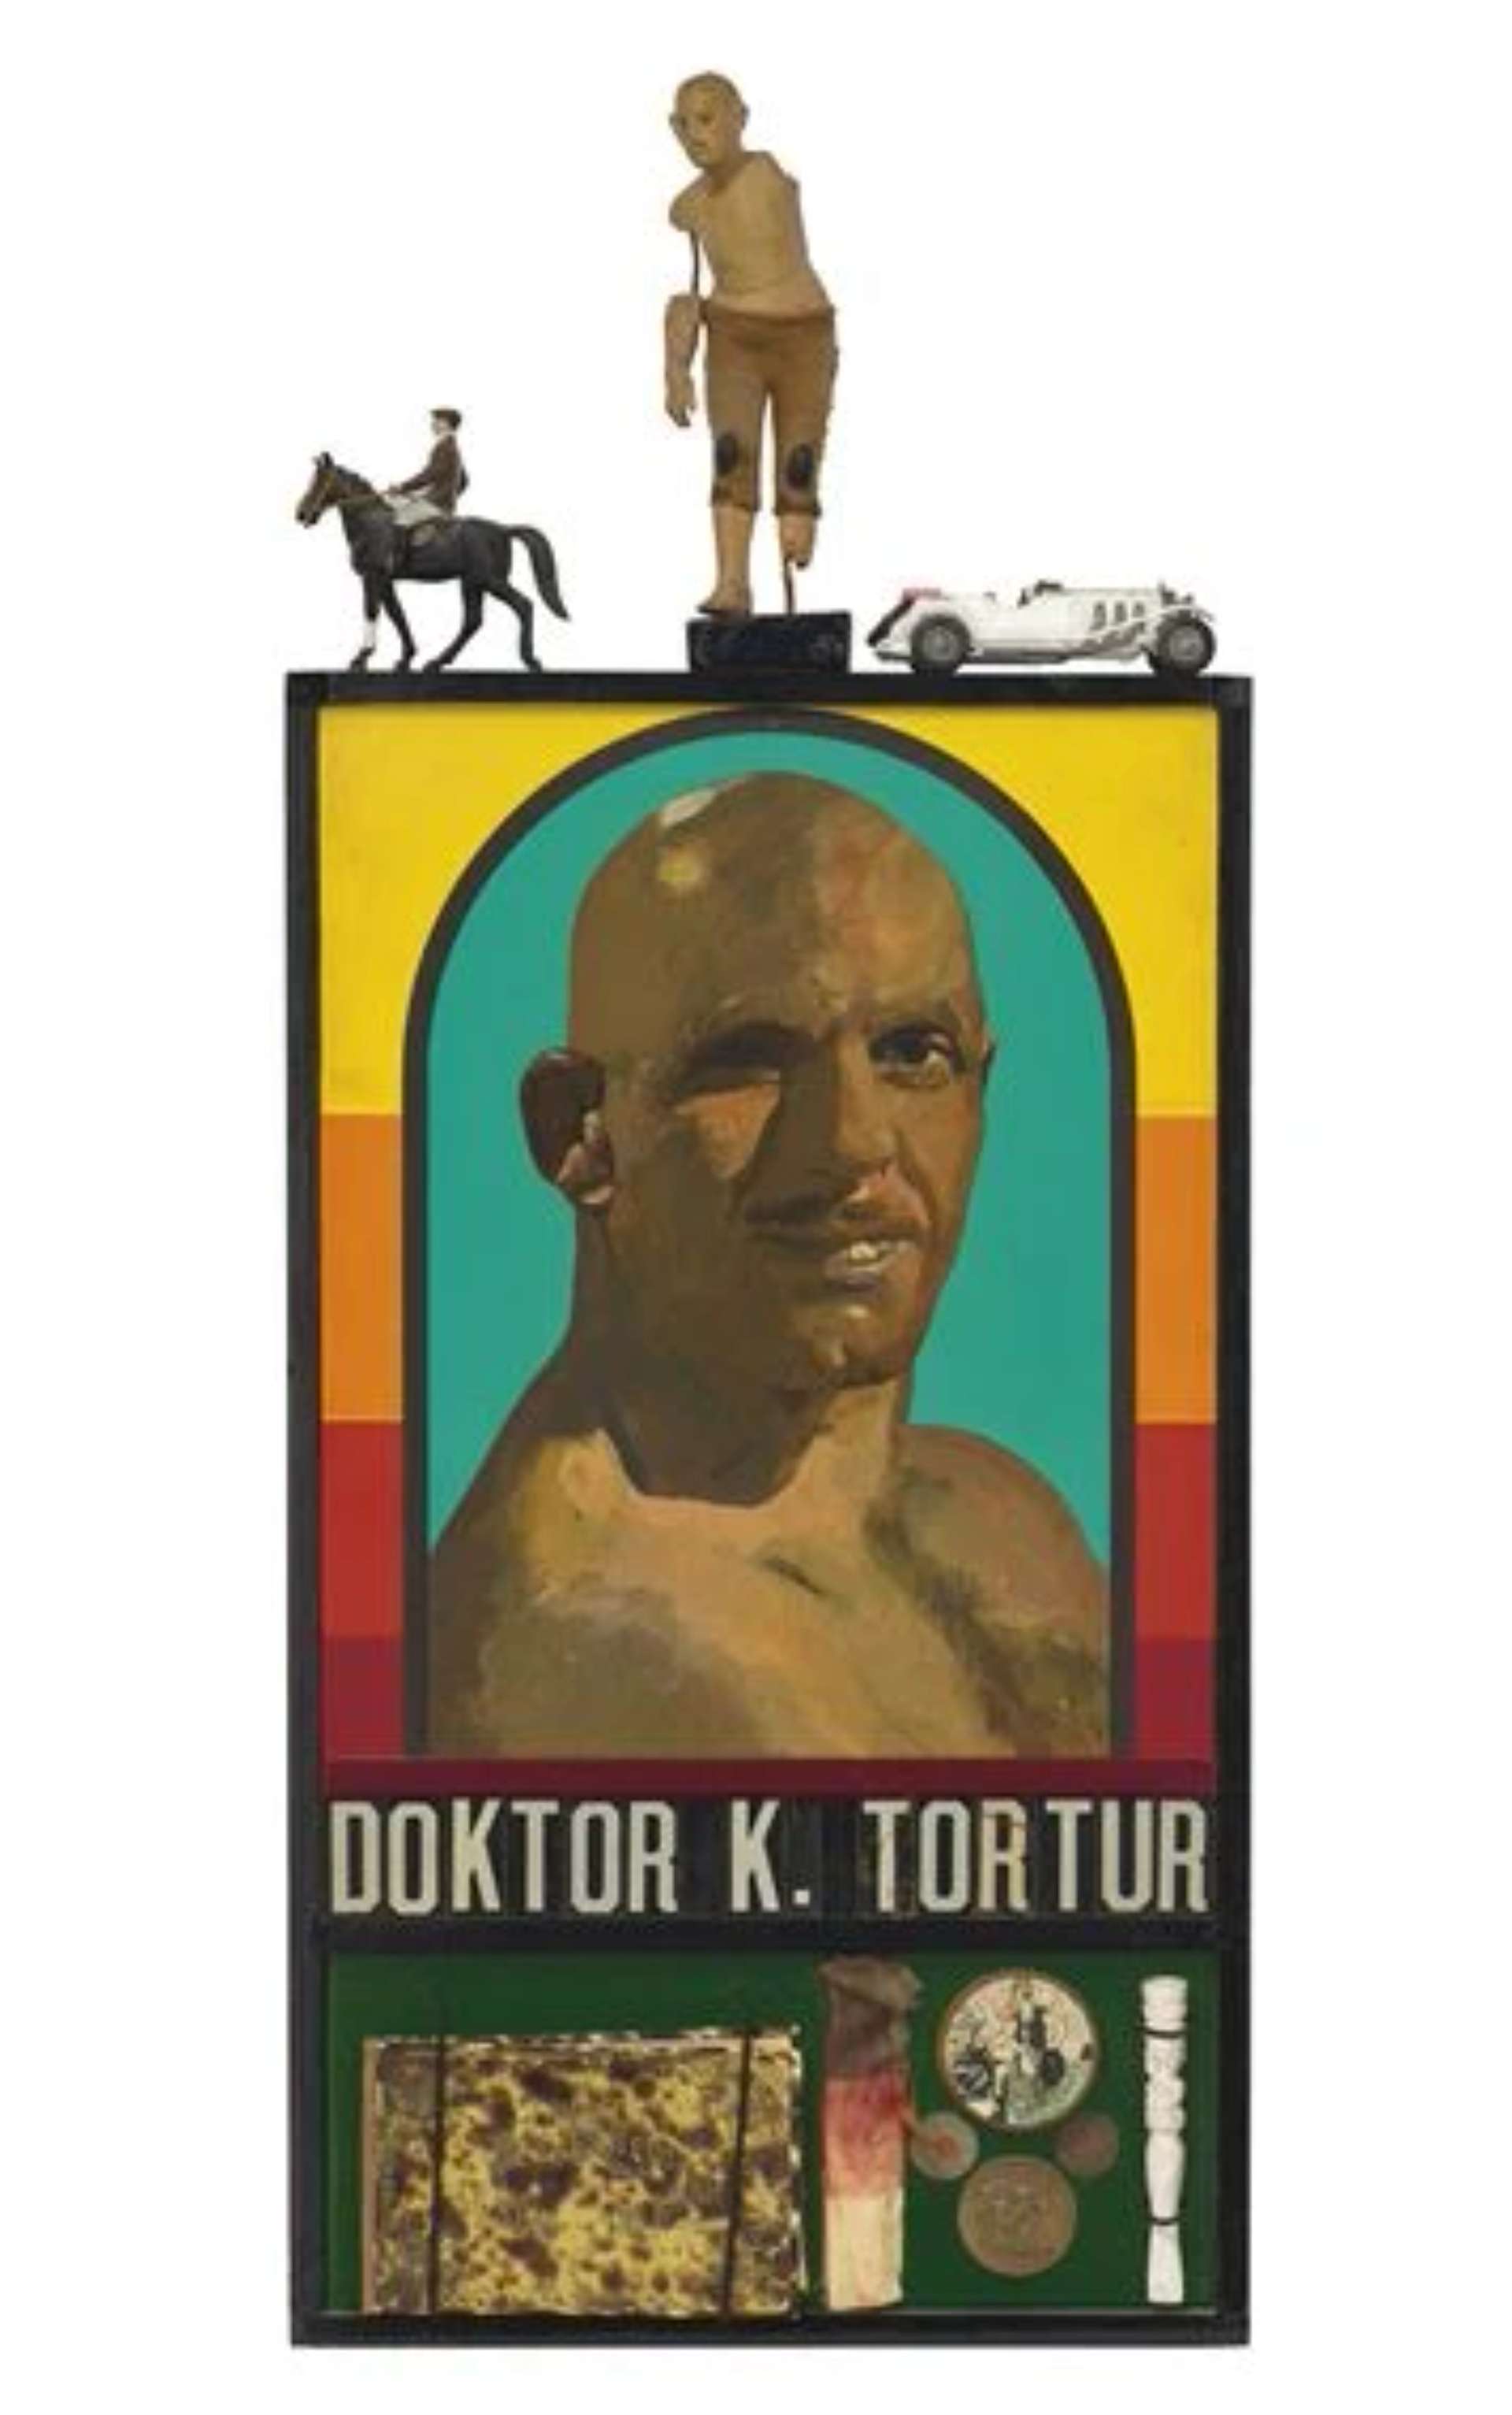 Doktor K. Tortur by Peter Blake